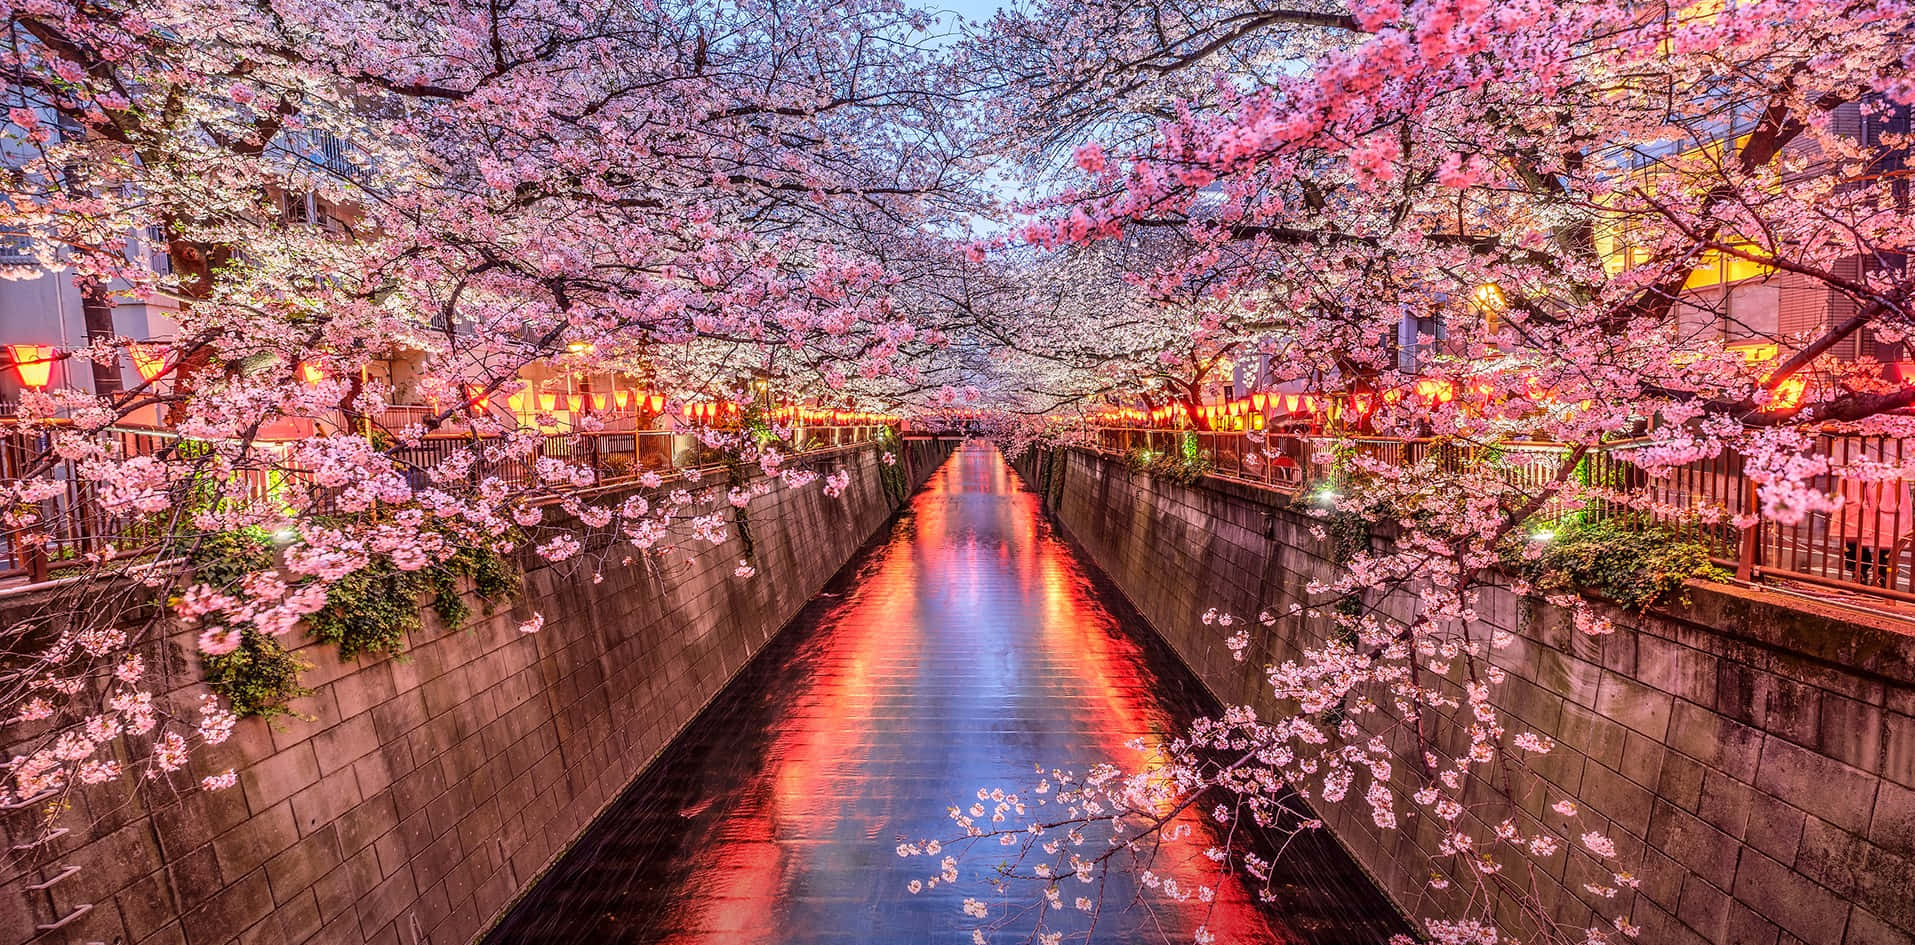 Hintergrundbildfür Zoom: Meguro-kanal, Japan, Im Frühling